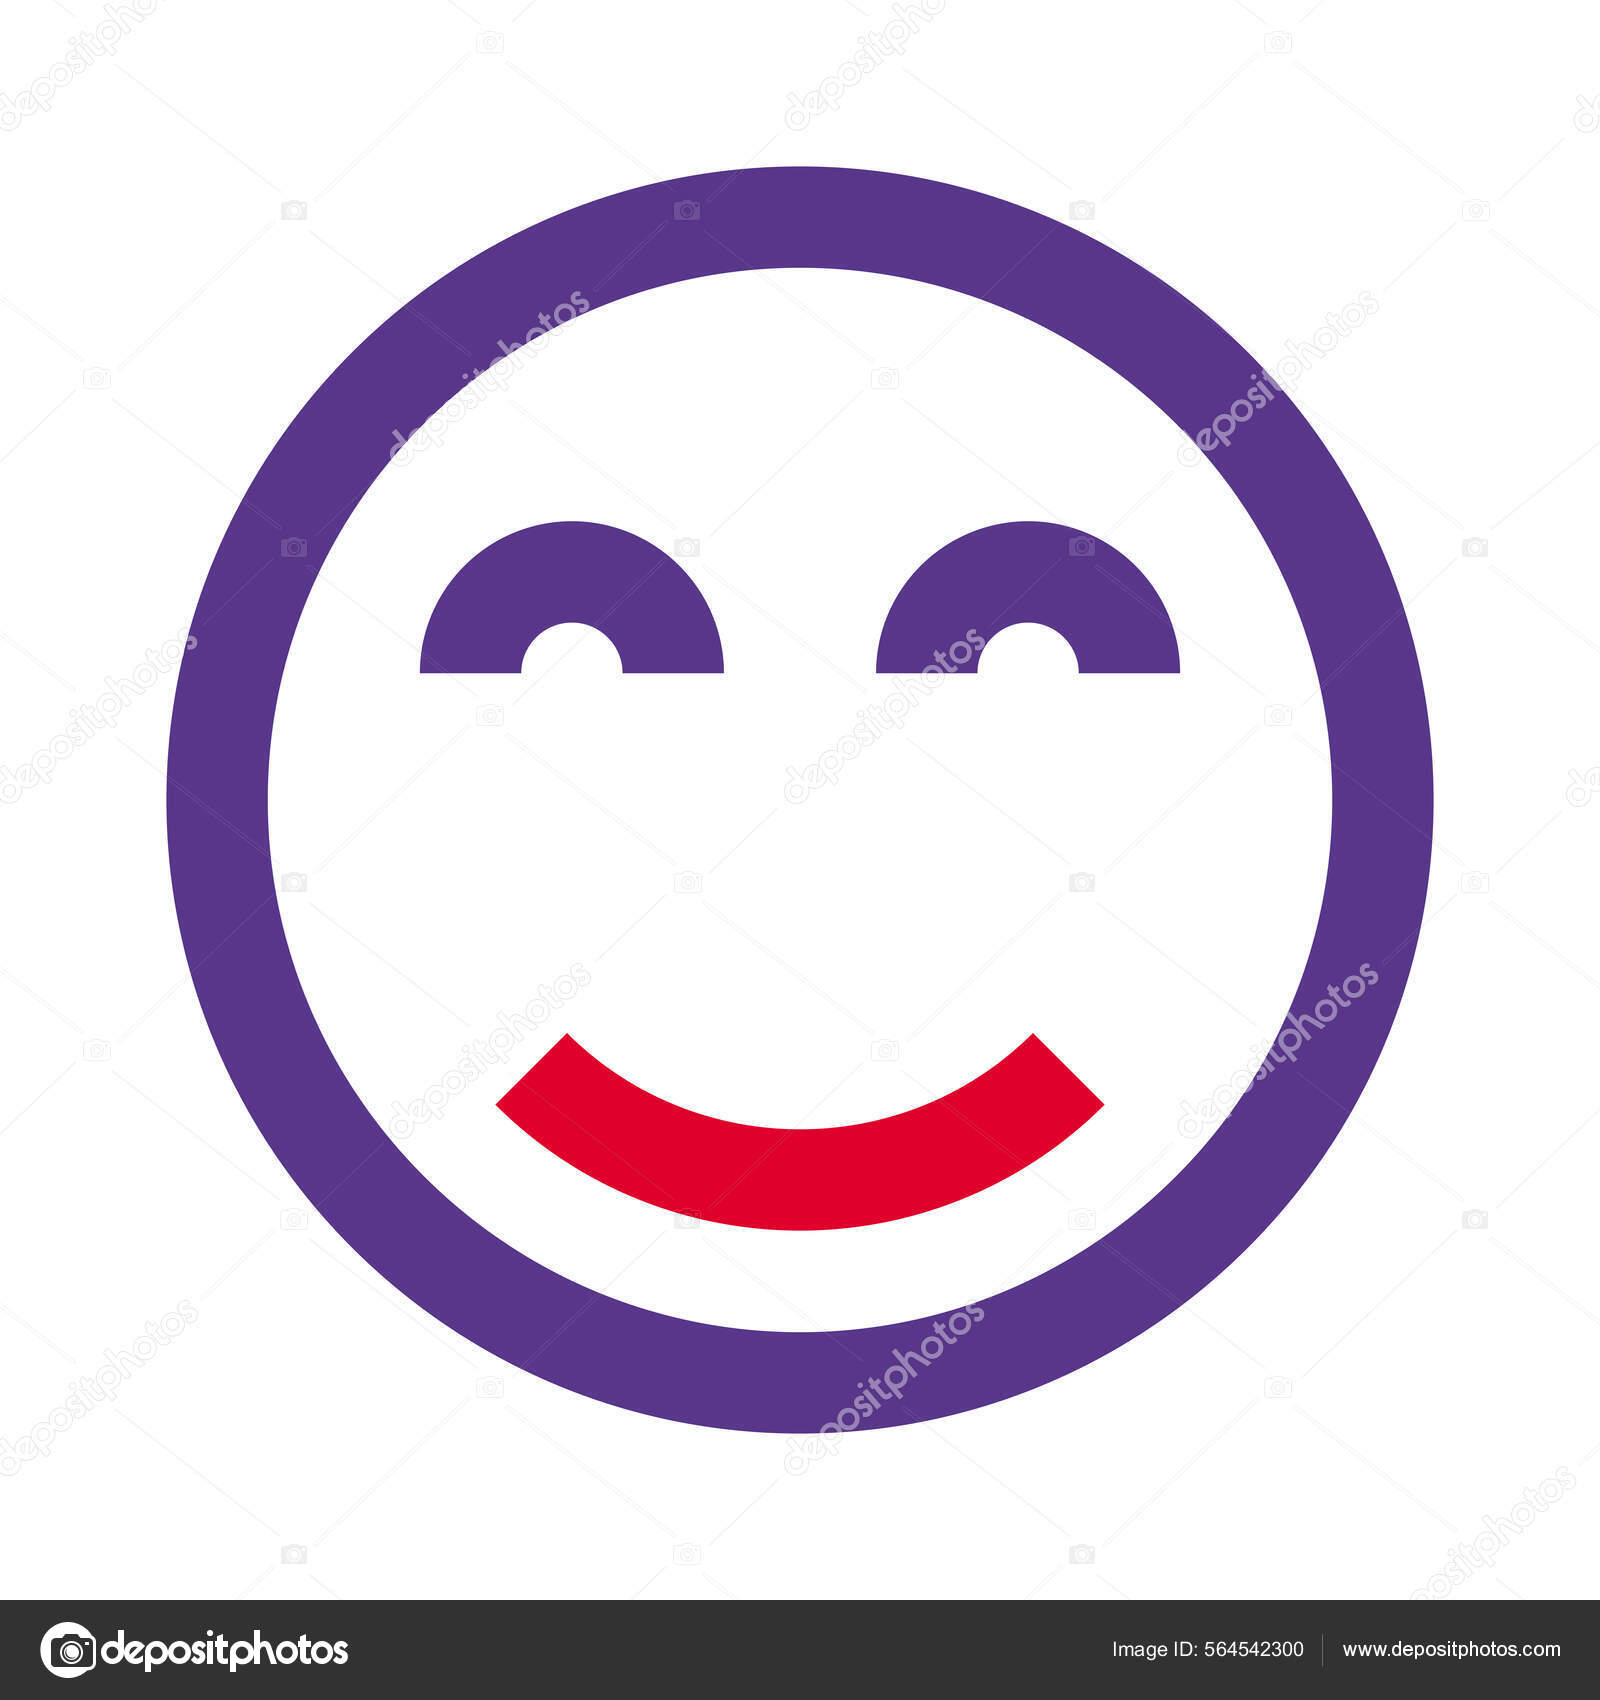 Conjunto de ícones de emoji rostos símbolos de humor emoticon fofos sorrindo  feliz, alegre, triste e com raiva